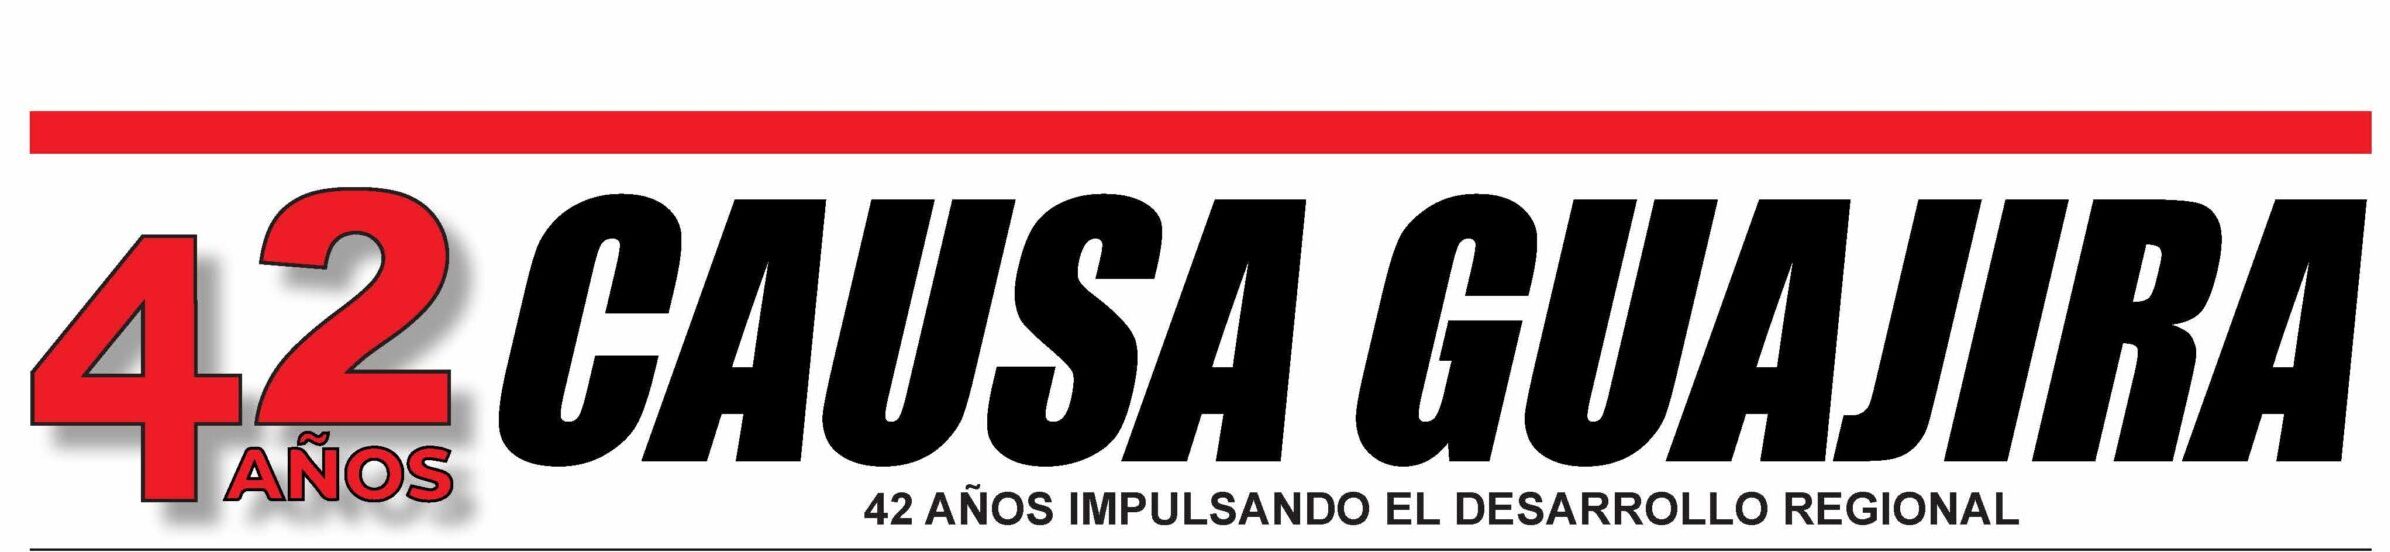 Causa Guajira